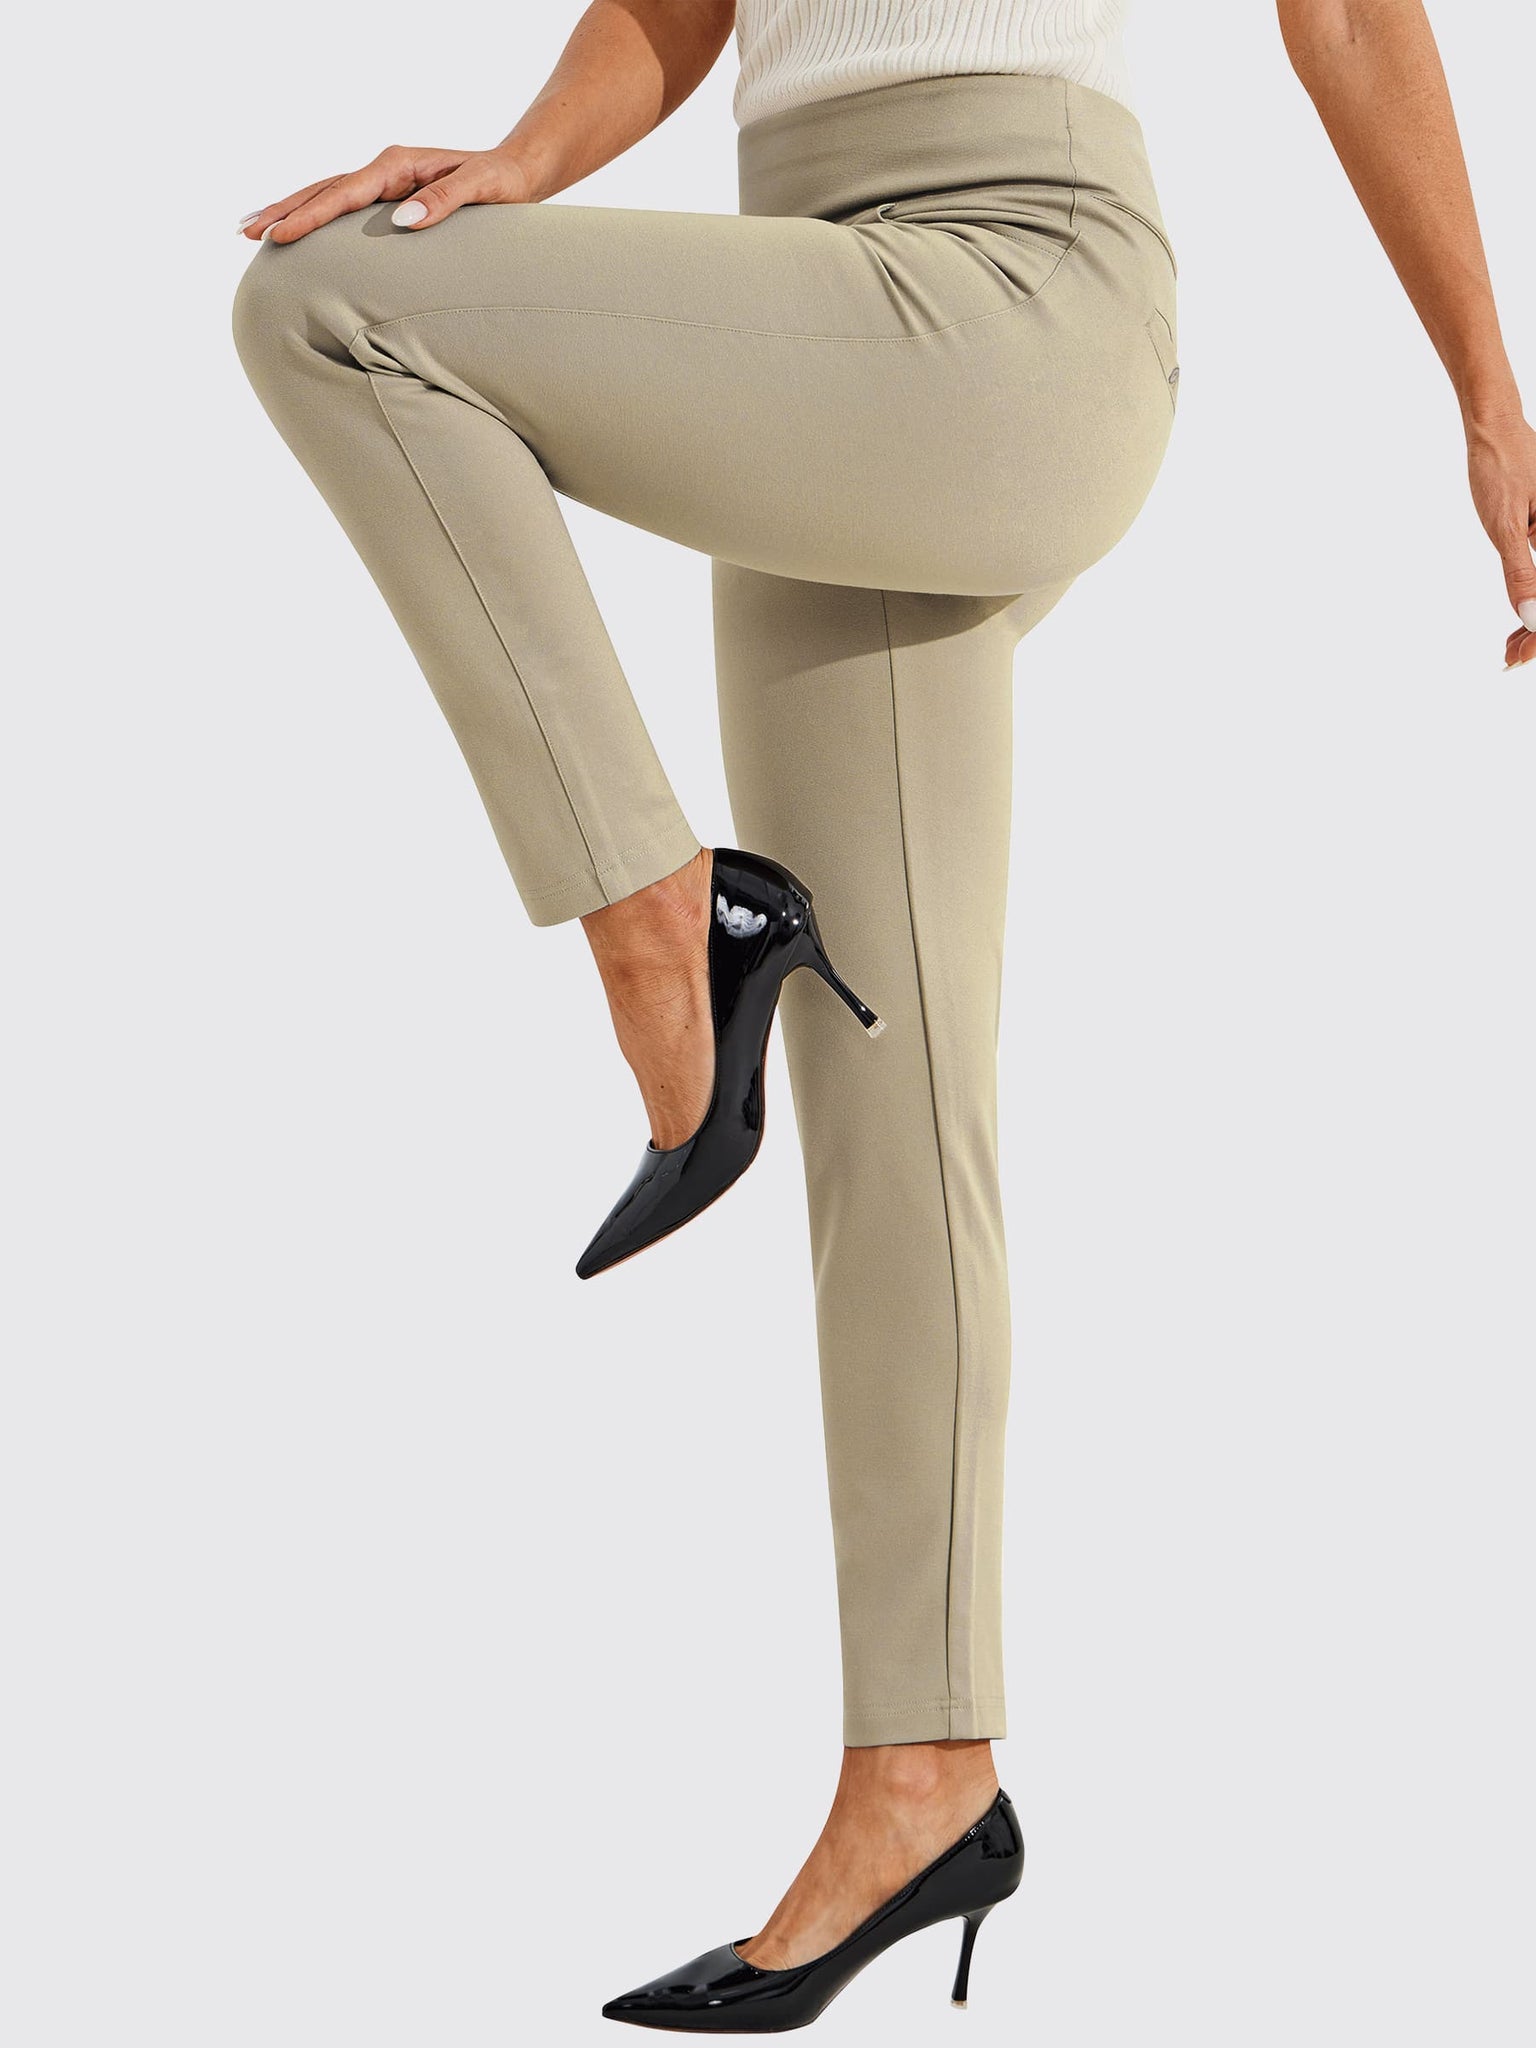 Women's Skinny Stretch Dress Pants